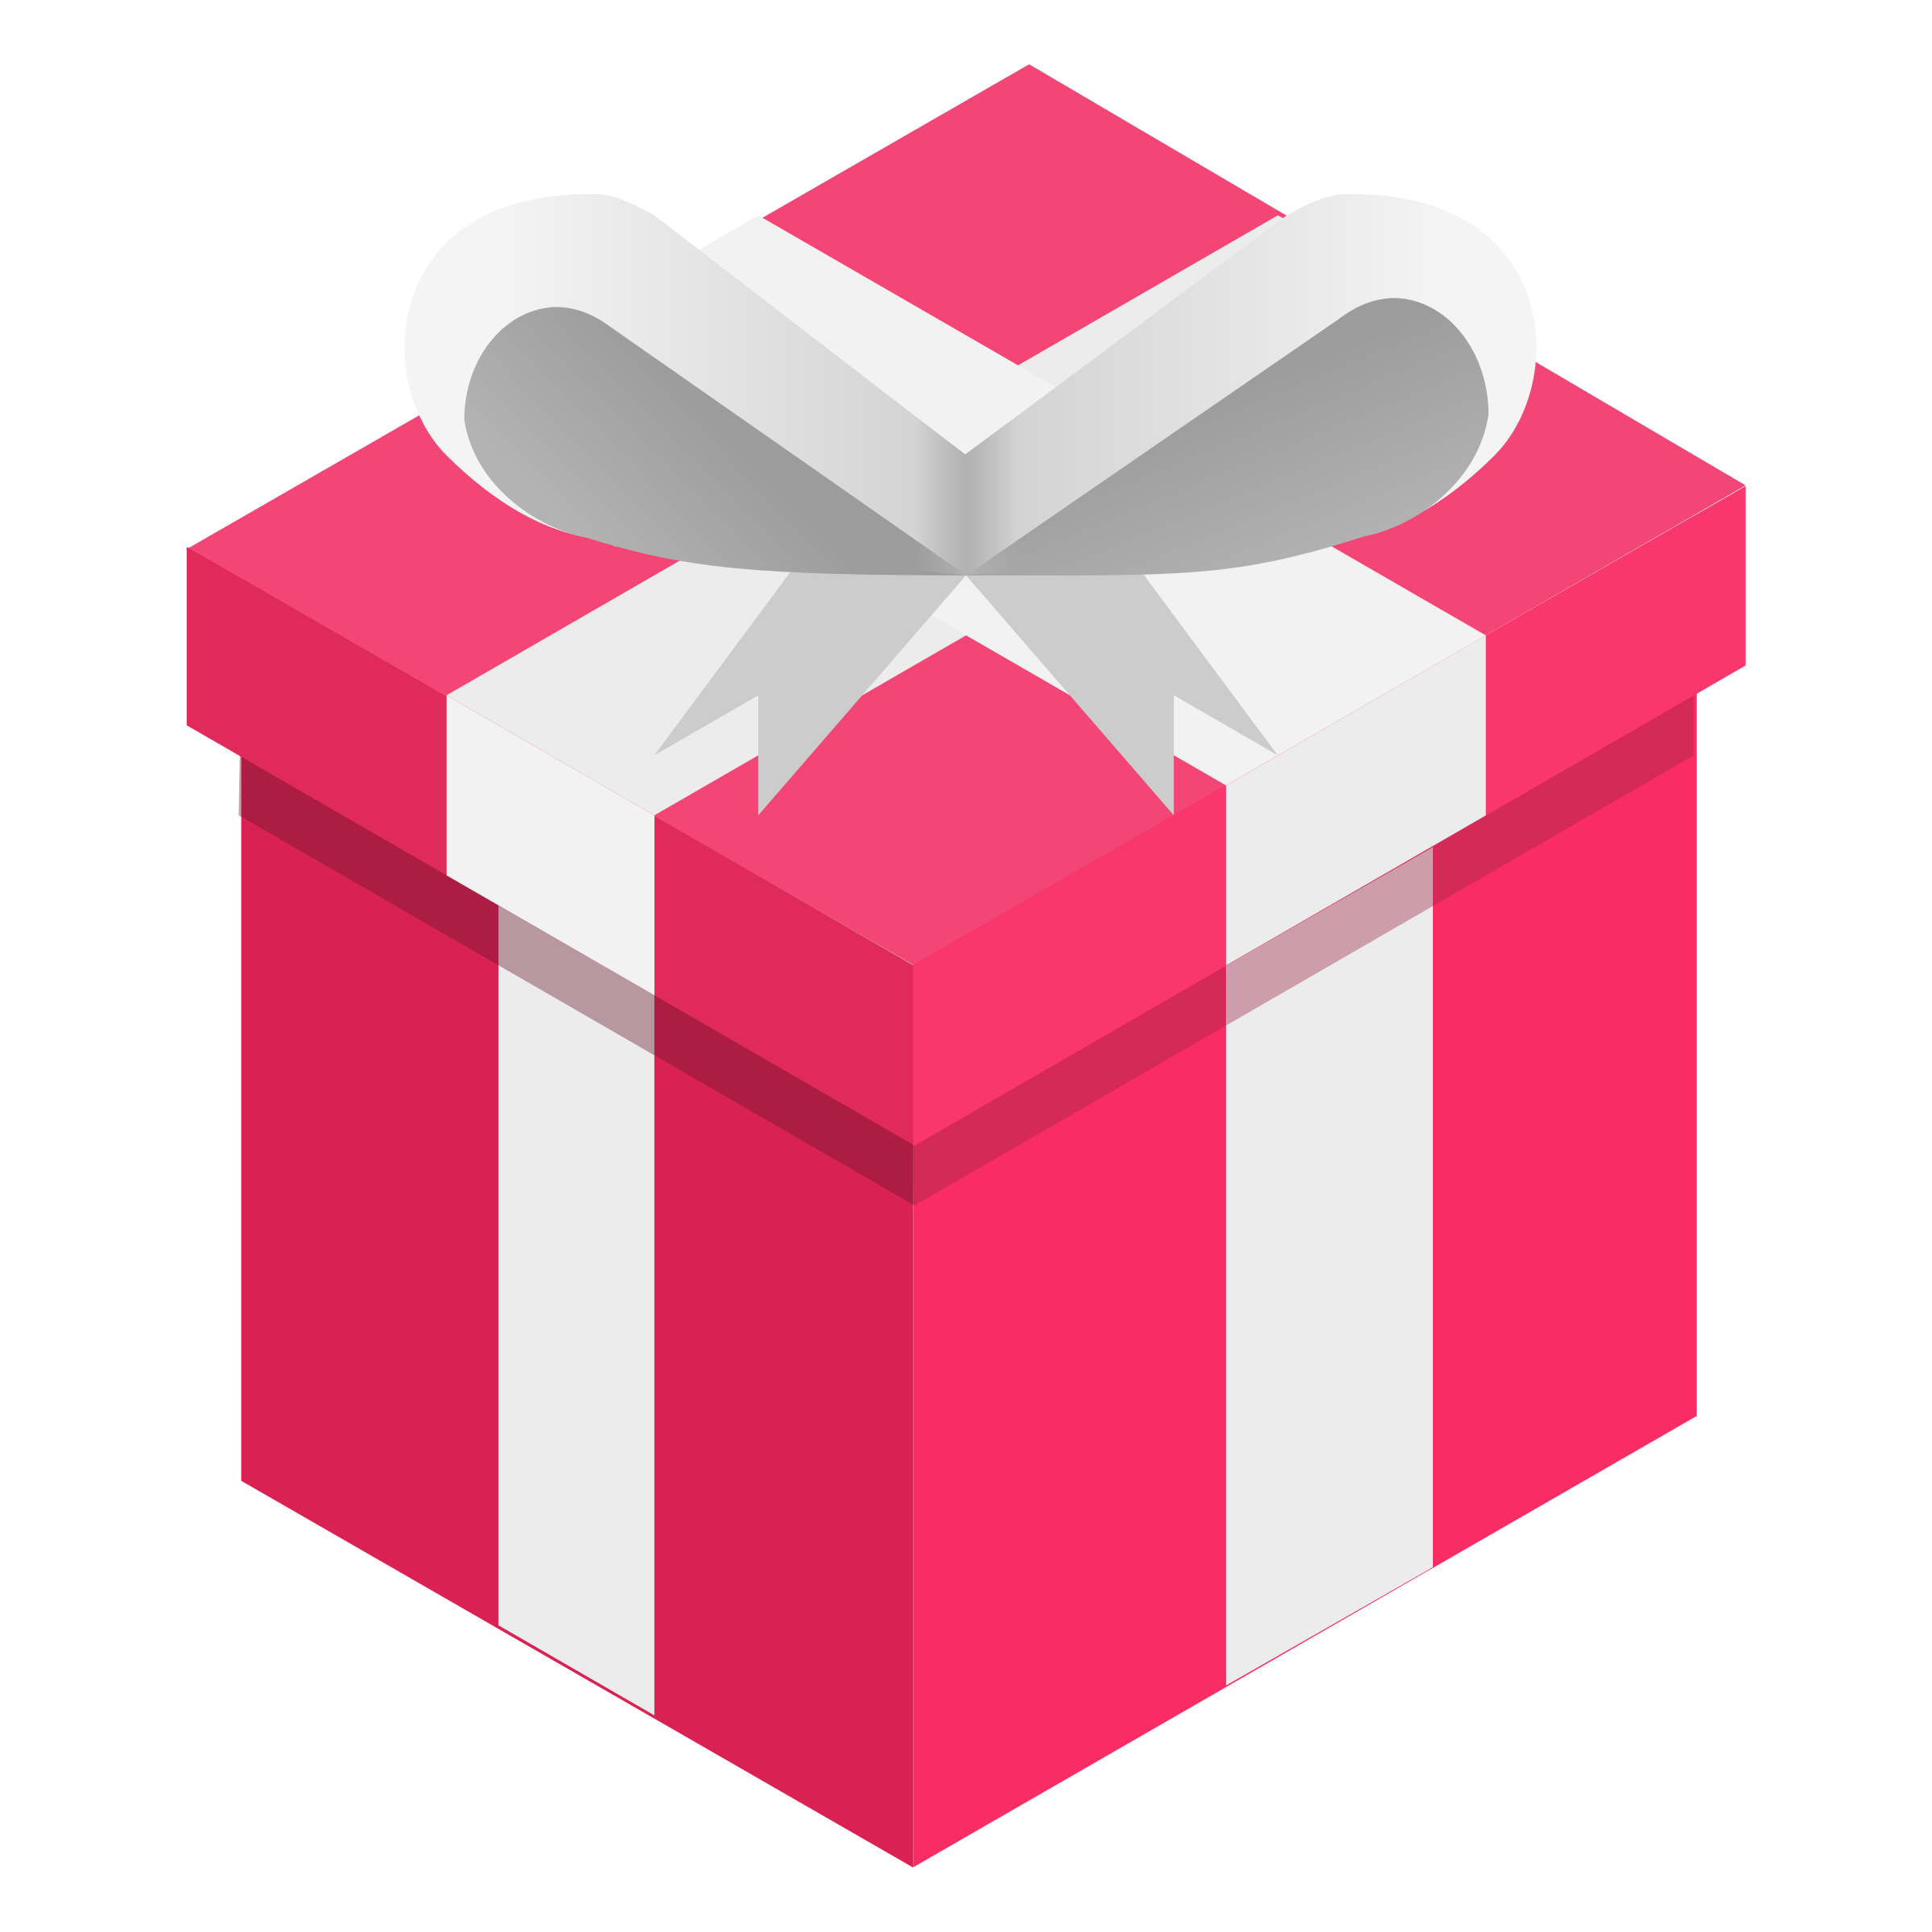 Gift Box By Tatica